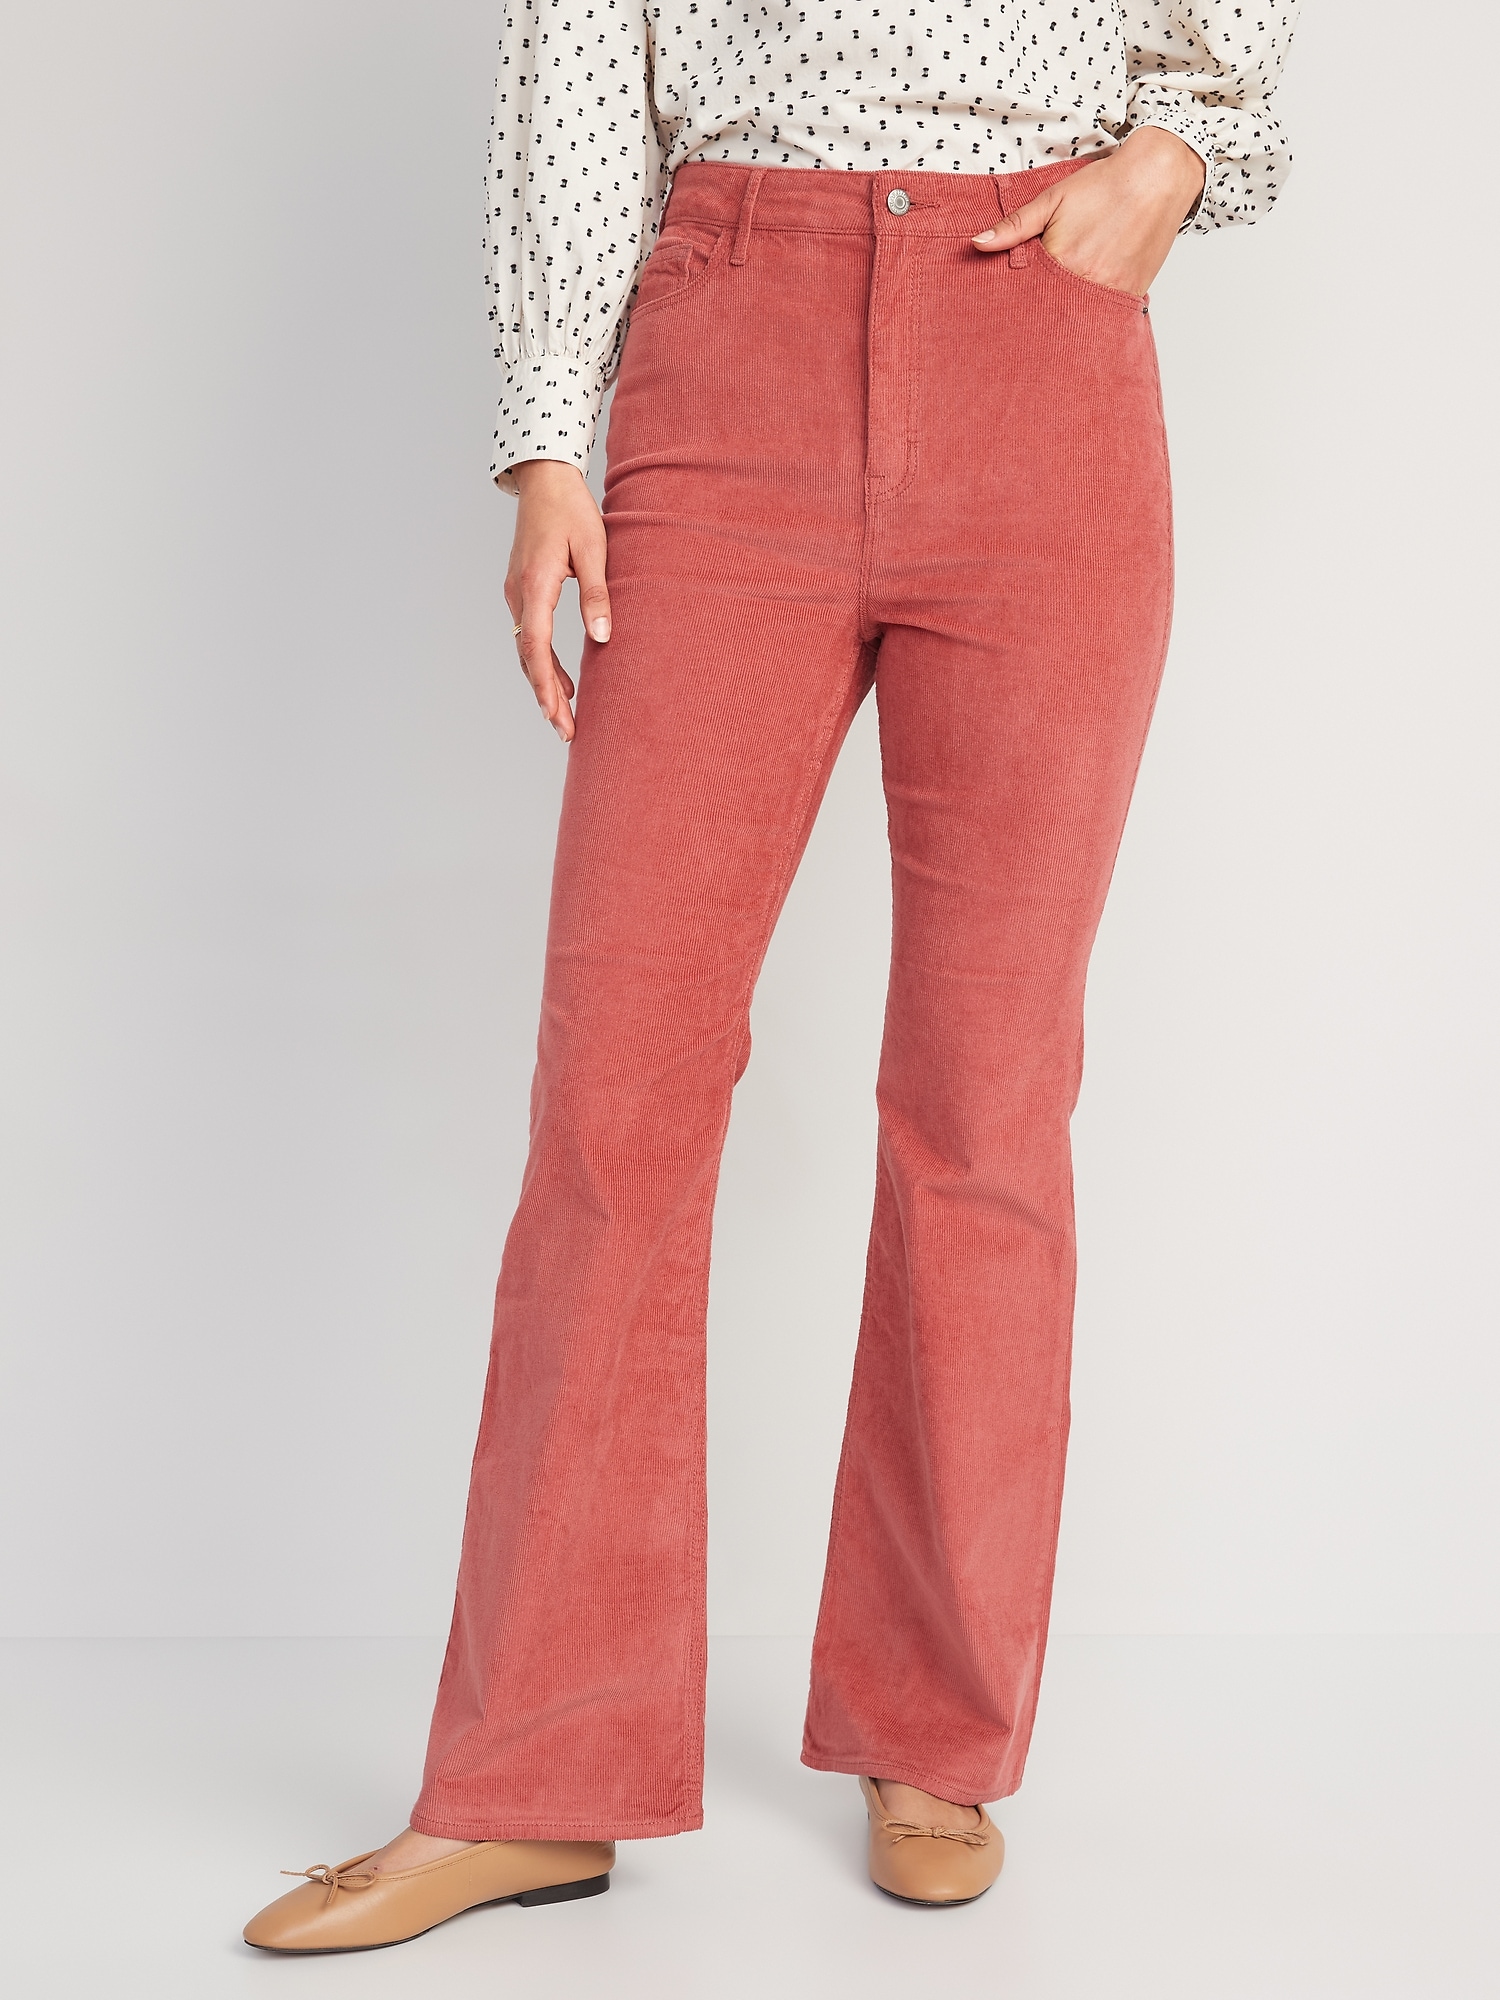  Vintage Corduroy Pants for Women Fall Winter Work